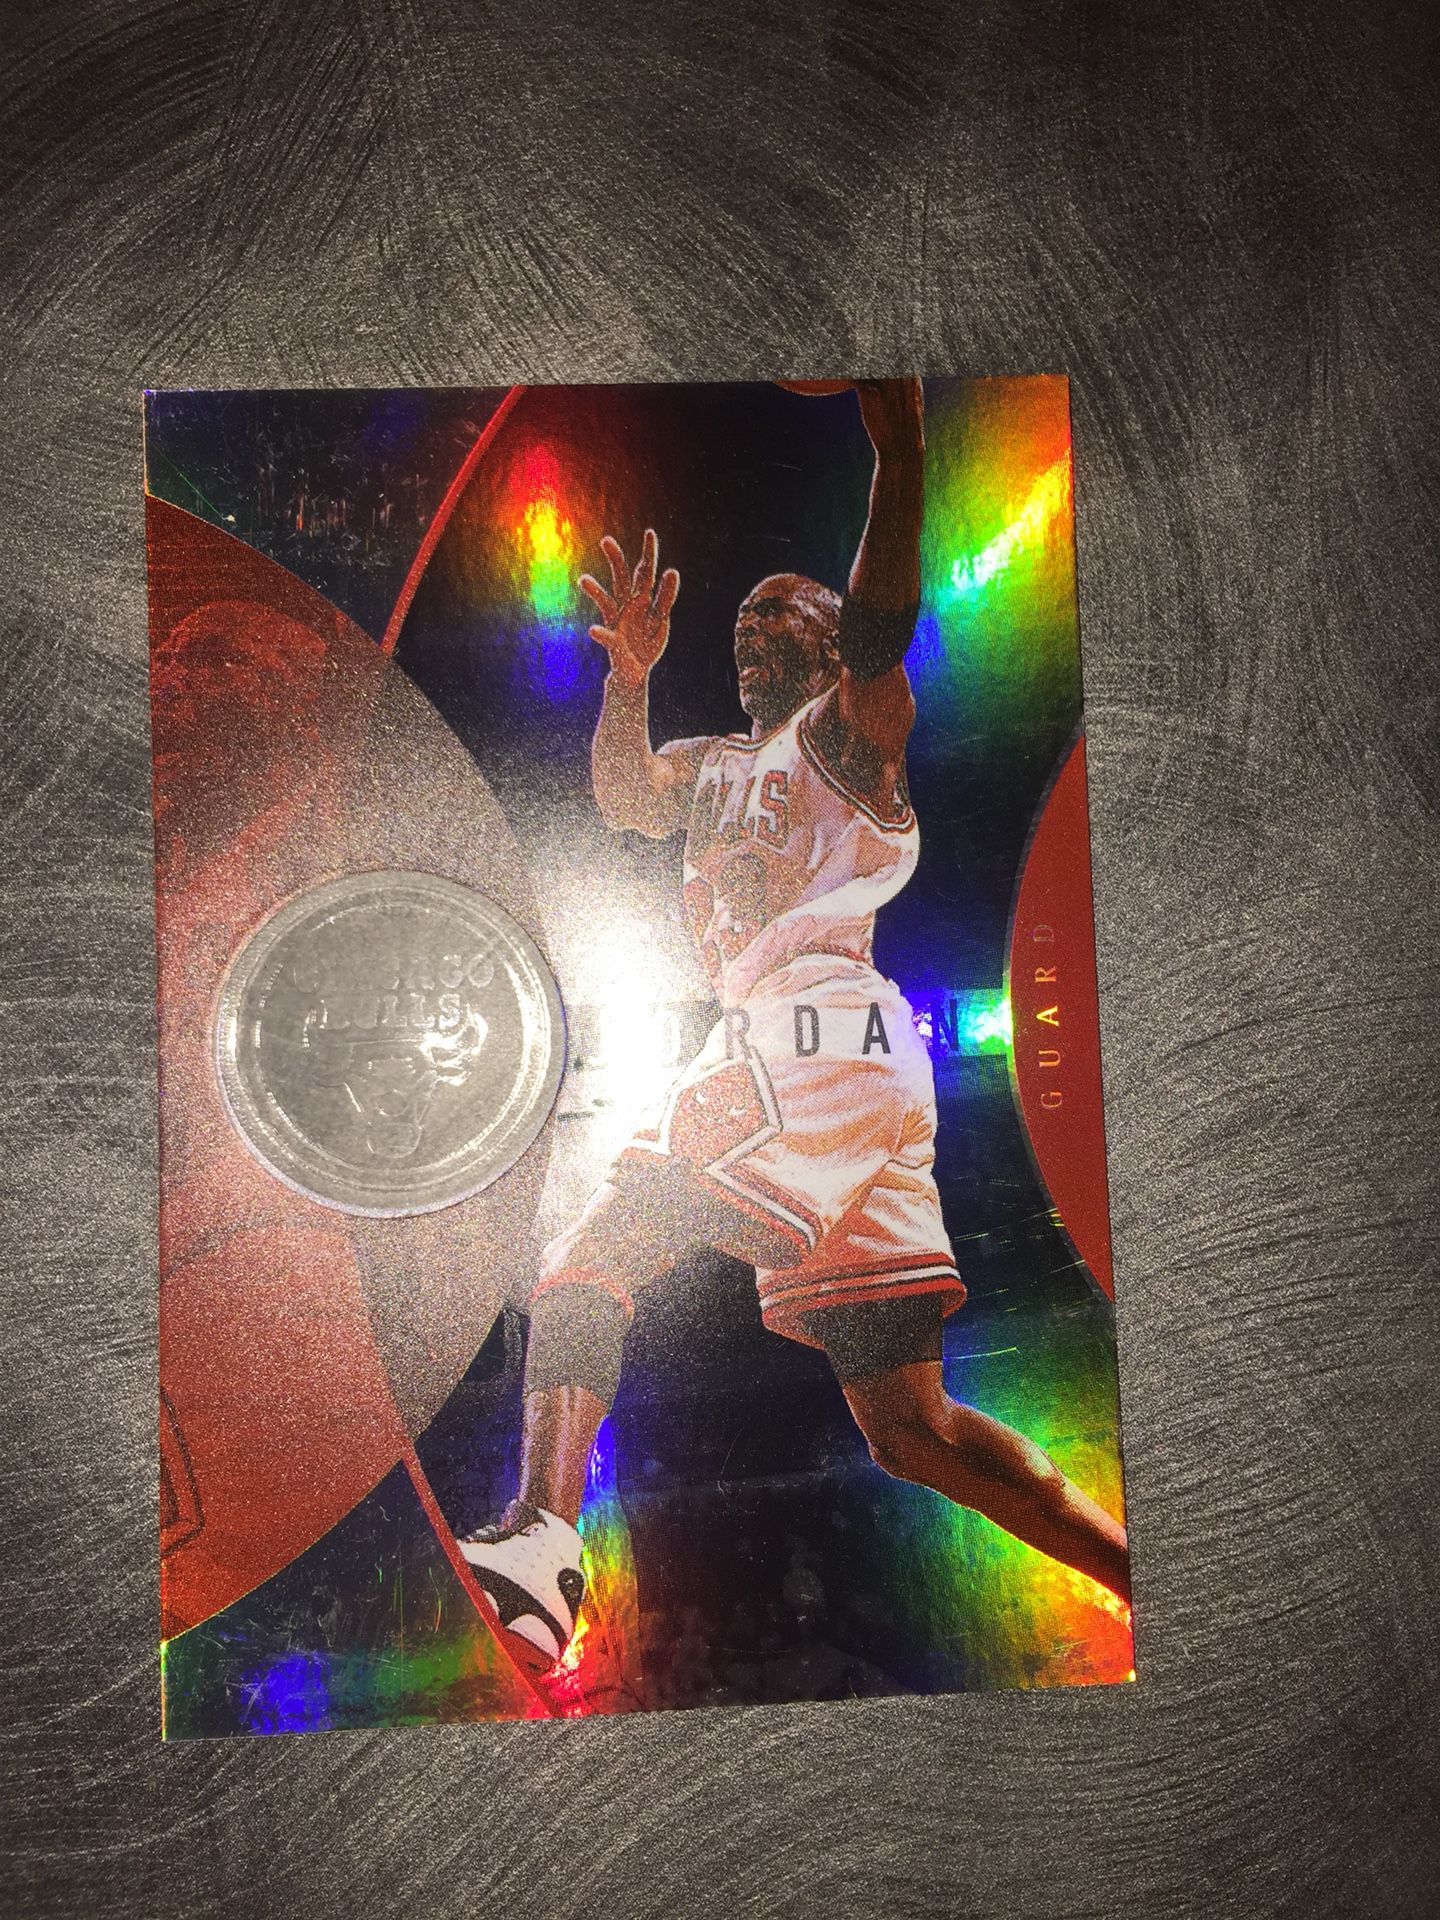 Prototype Micheal Jordan basketball card